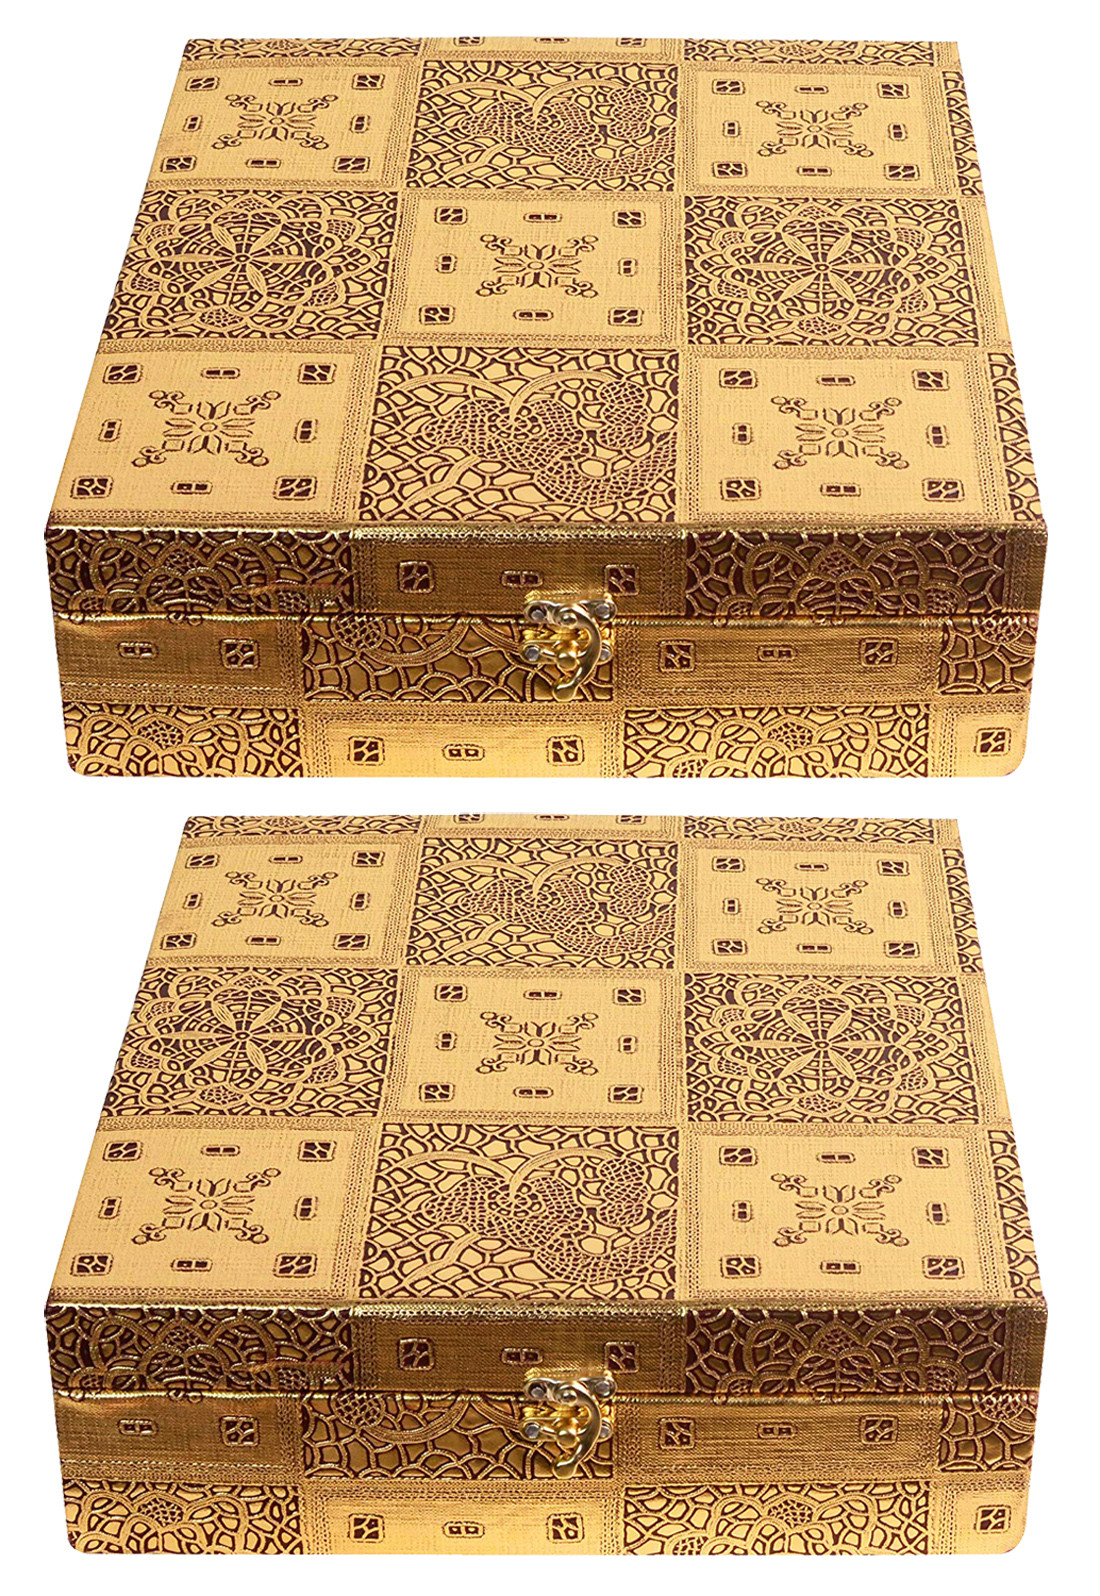 Kuber Industries Wooden Three Rod Bangle Storage Box with Lock System (Gold) -CTKTC39402